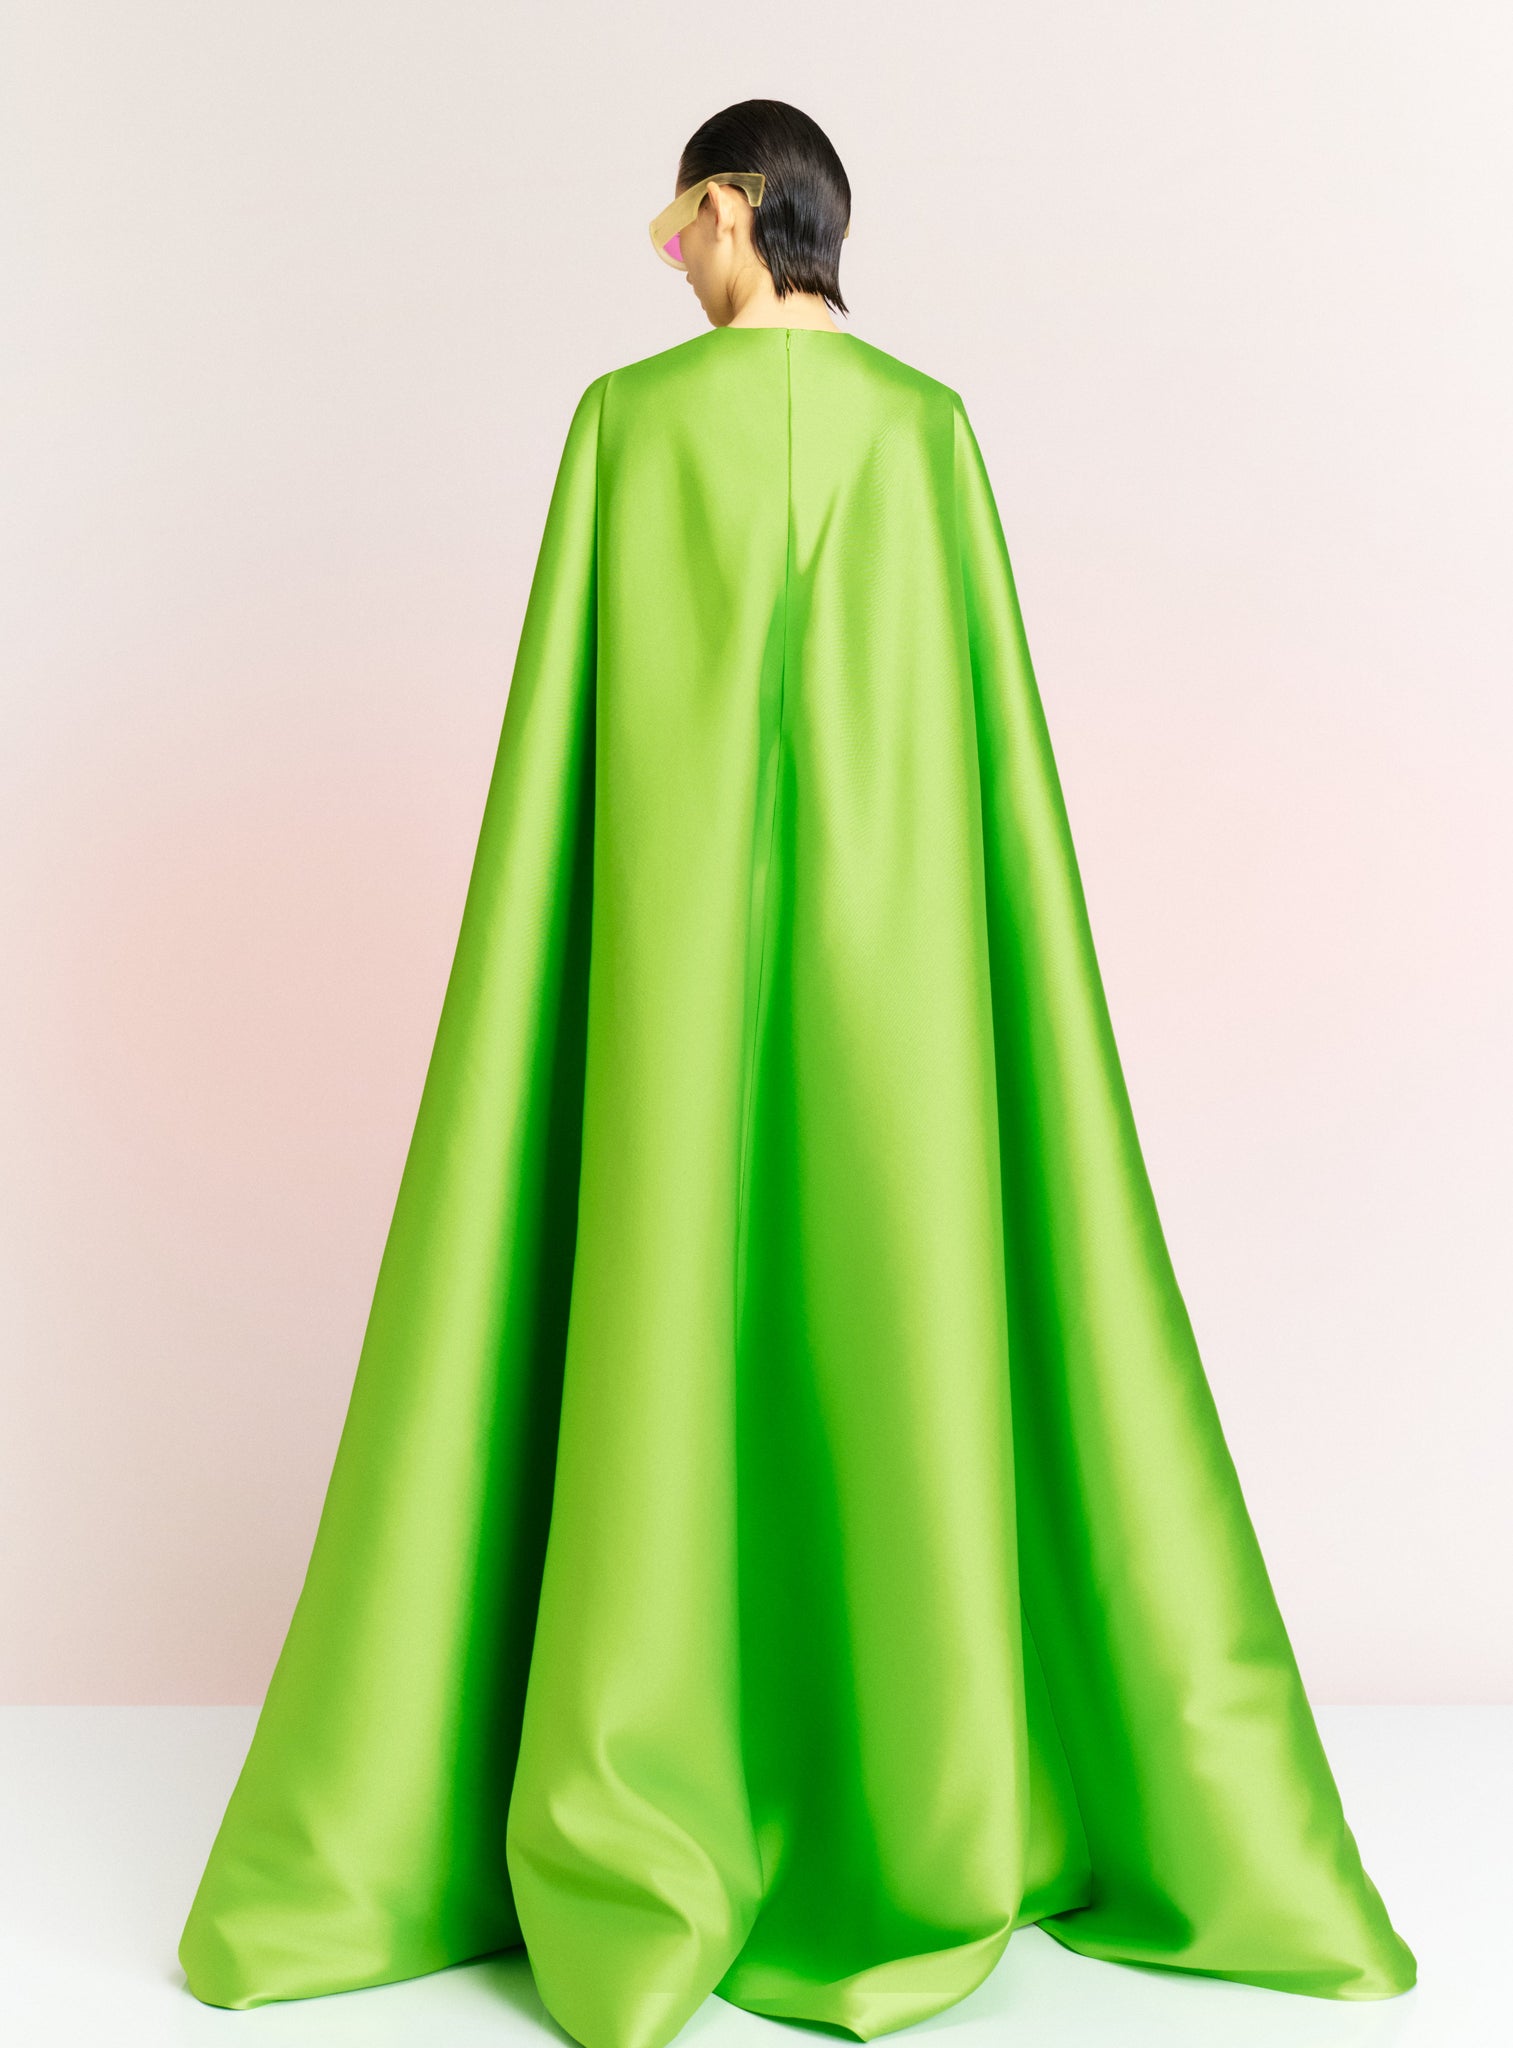 The Leni Maxi Dress in Green